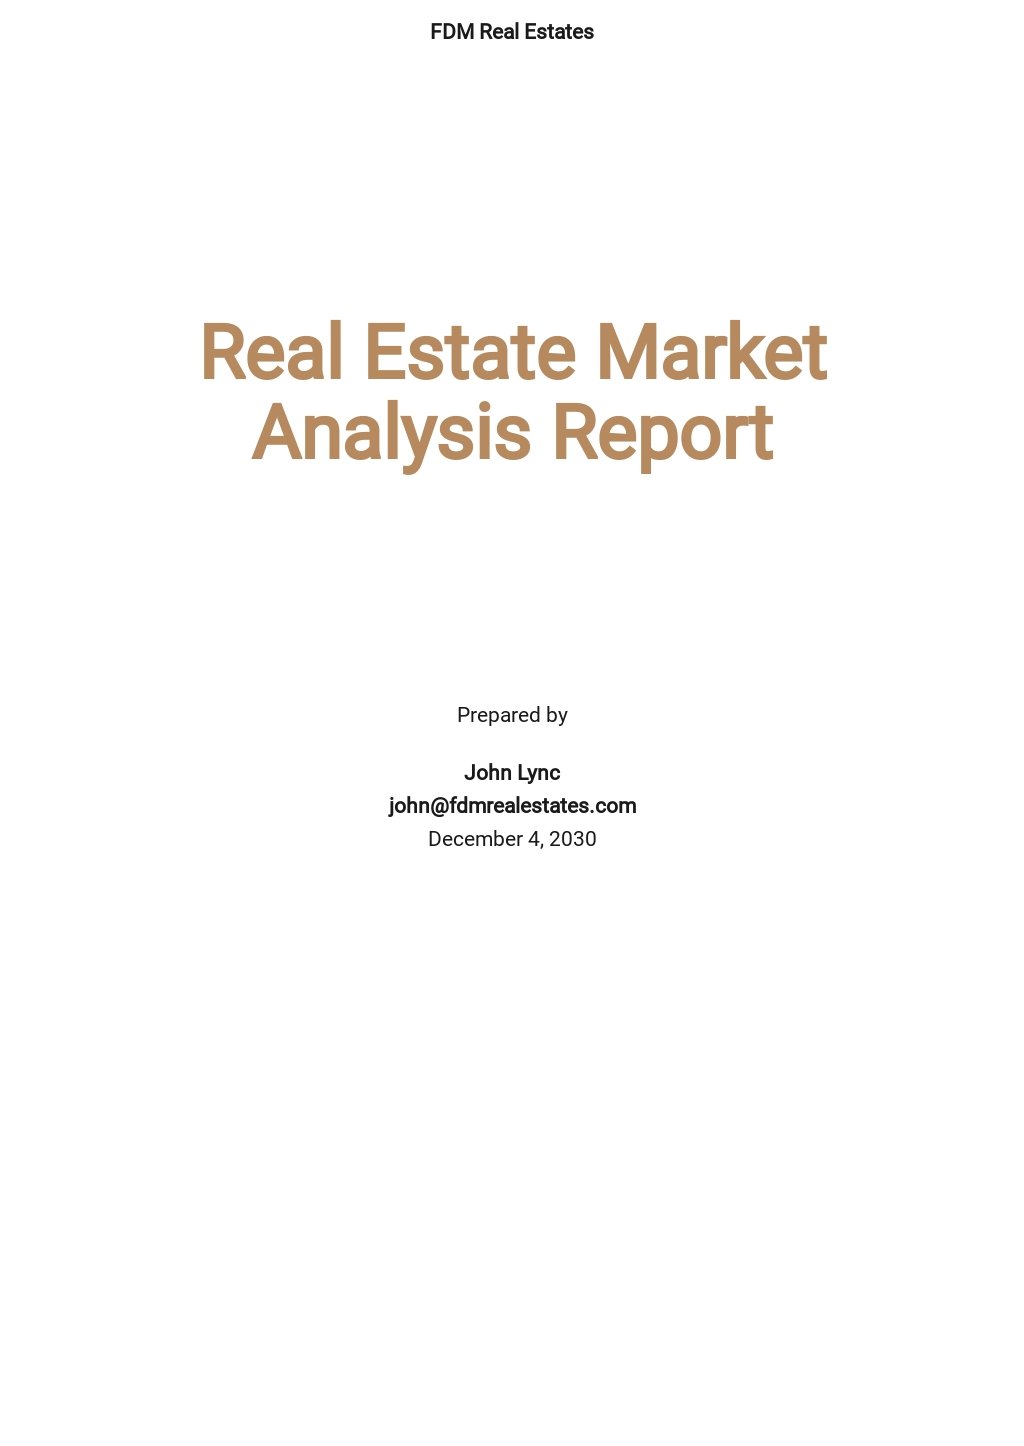 Real Estate Market Analysis Report Template.jpe